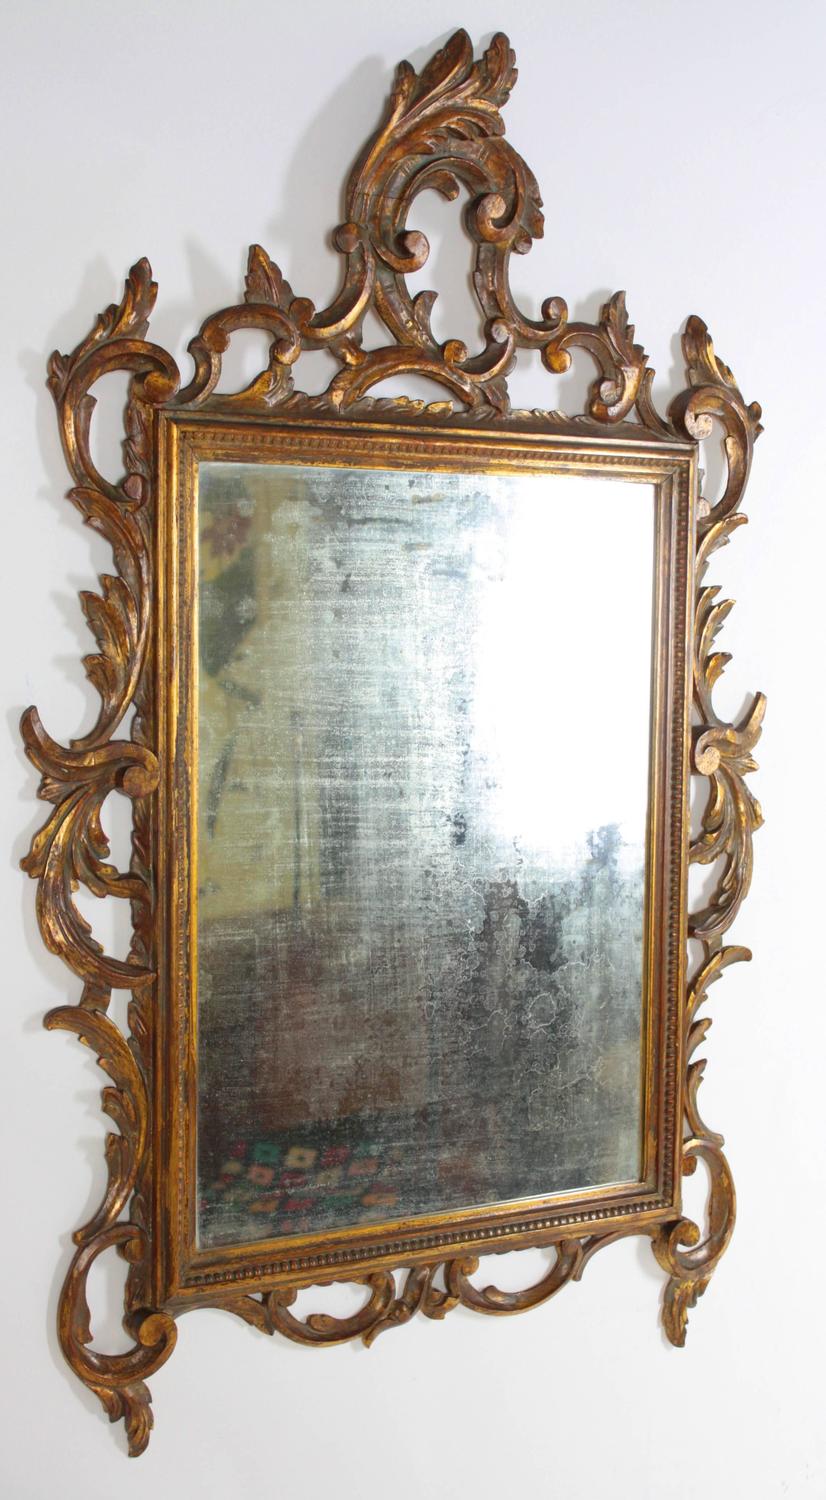 19th Century Spanish Rococo Style Giltwood Mirror at 1stdibs